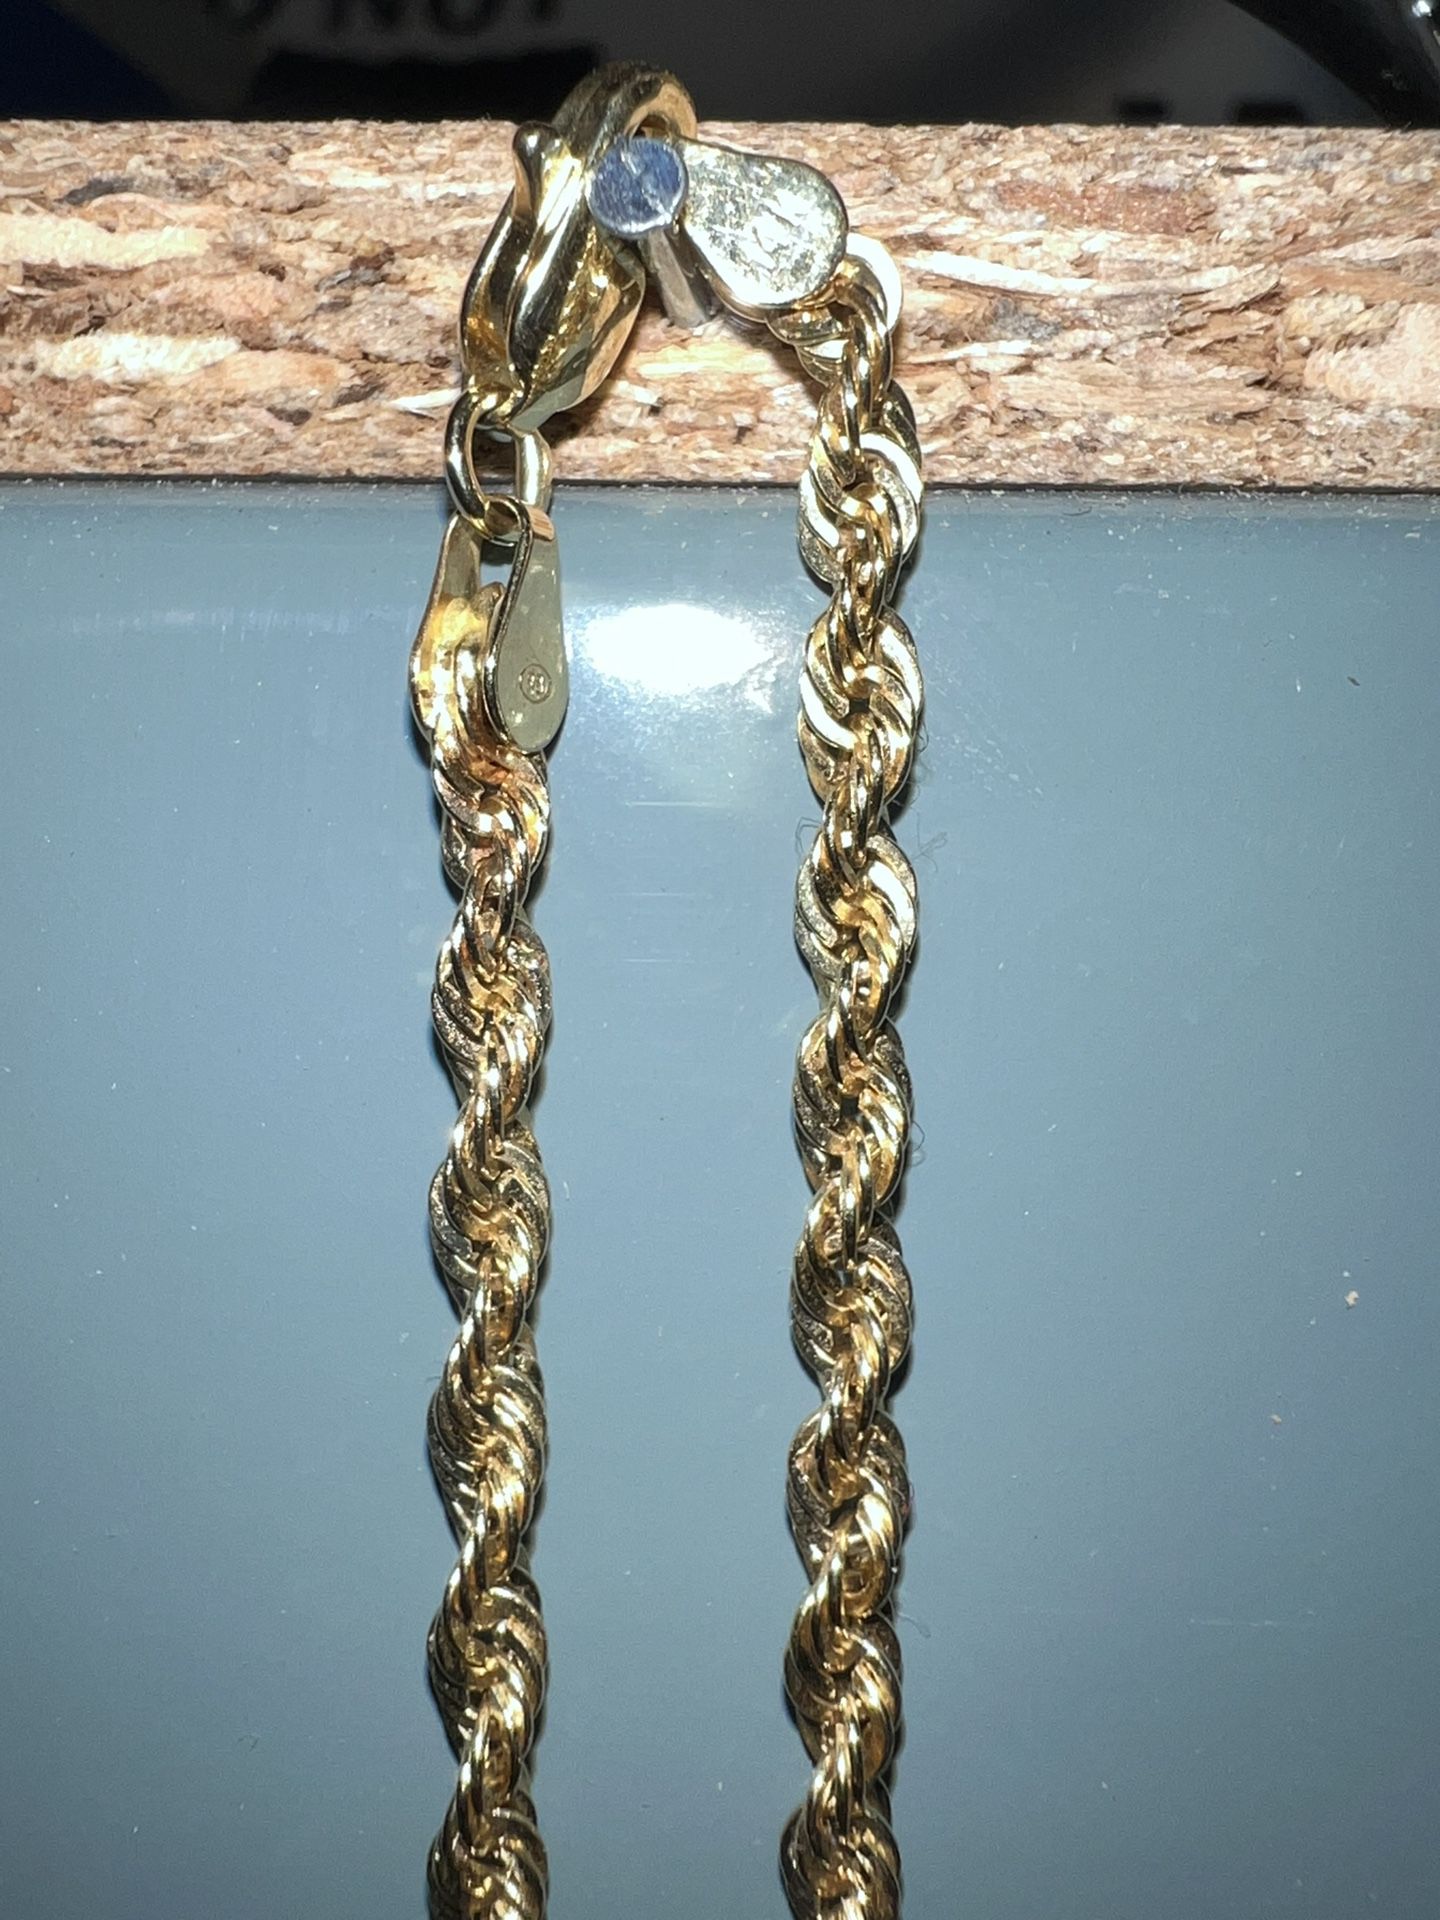 Gold Chain 